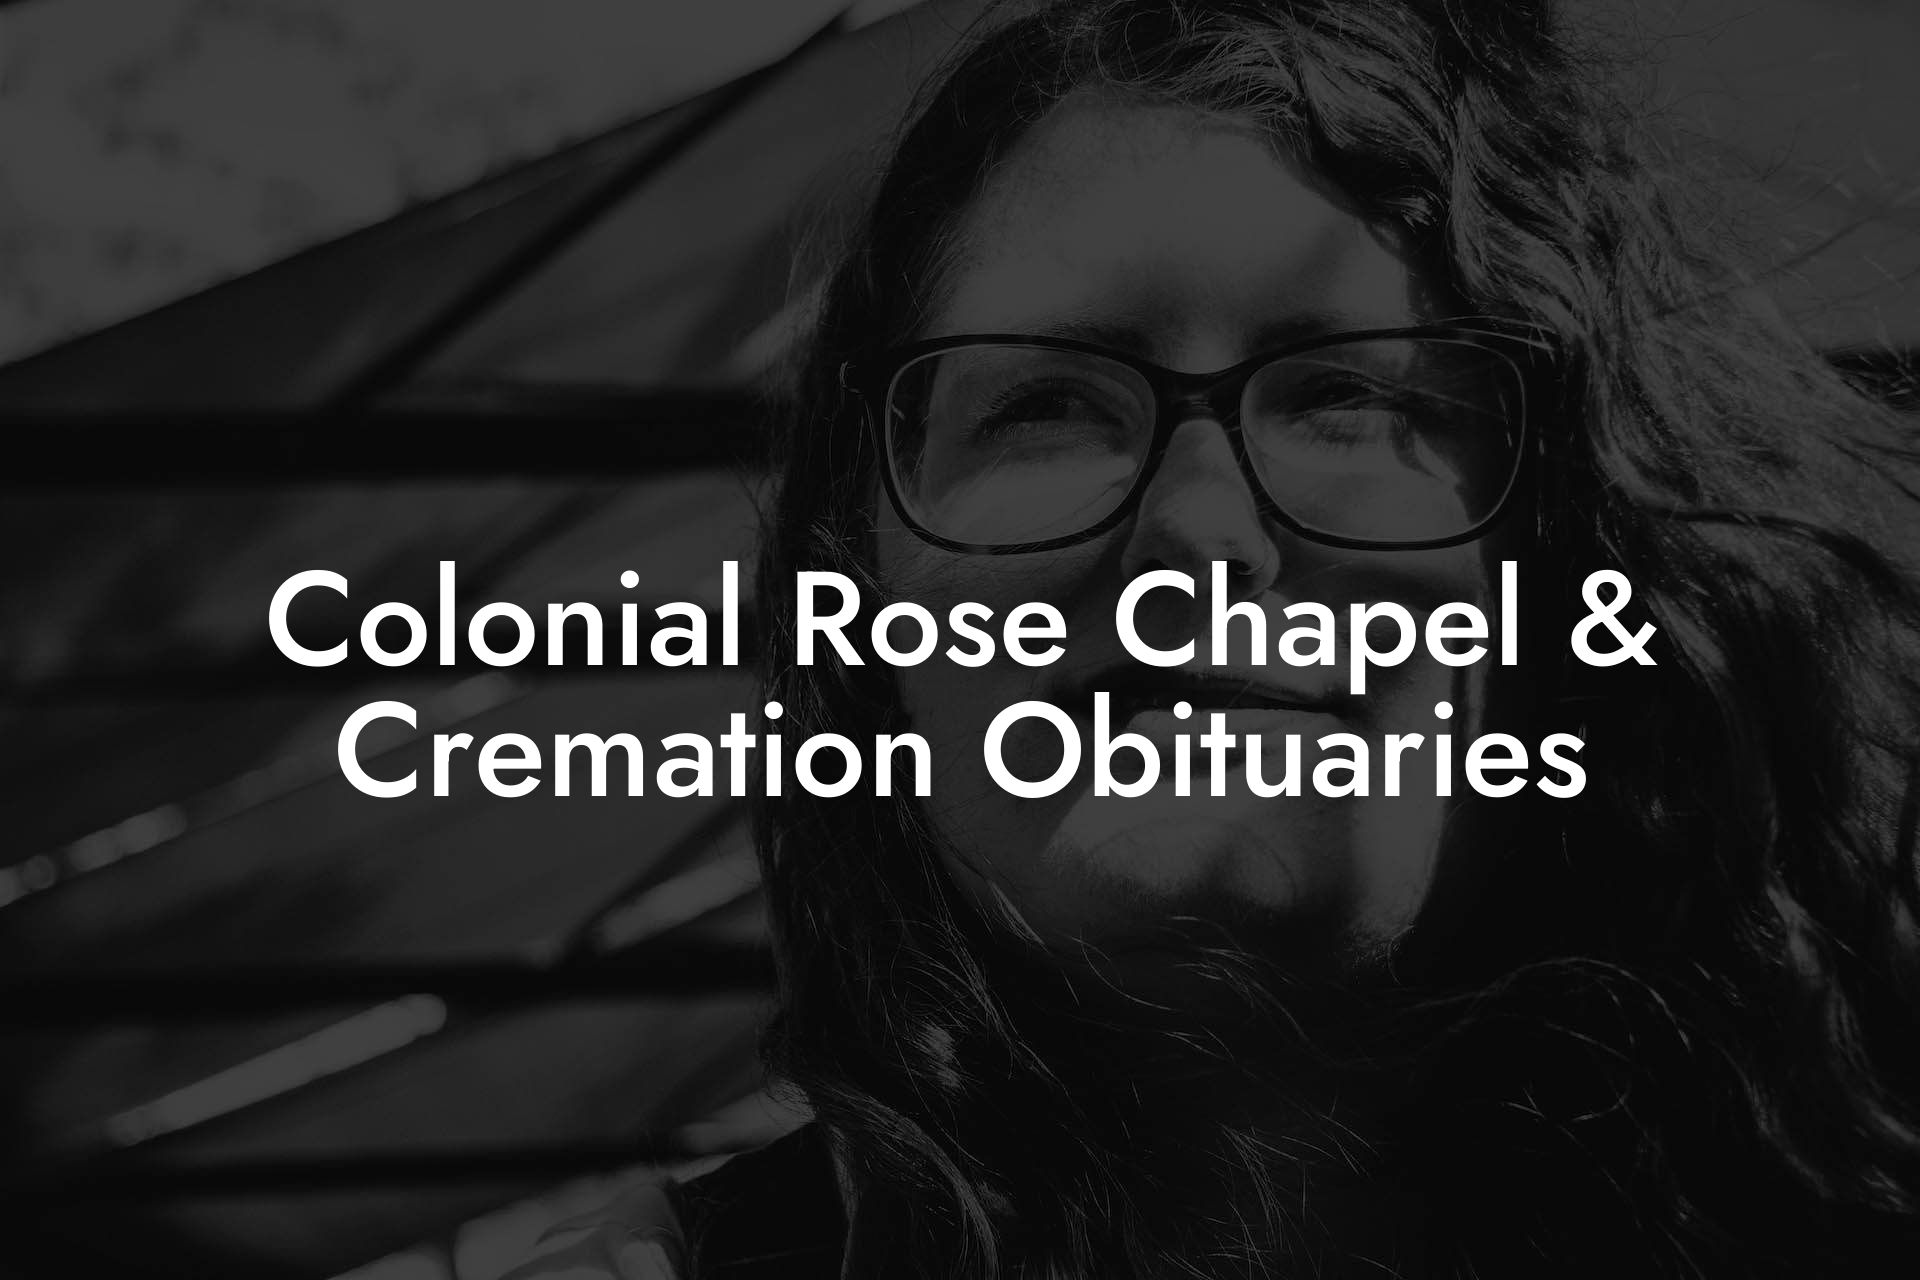 Colonial Rose Chapel & Cremation Obituaries